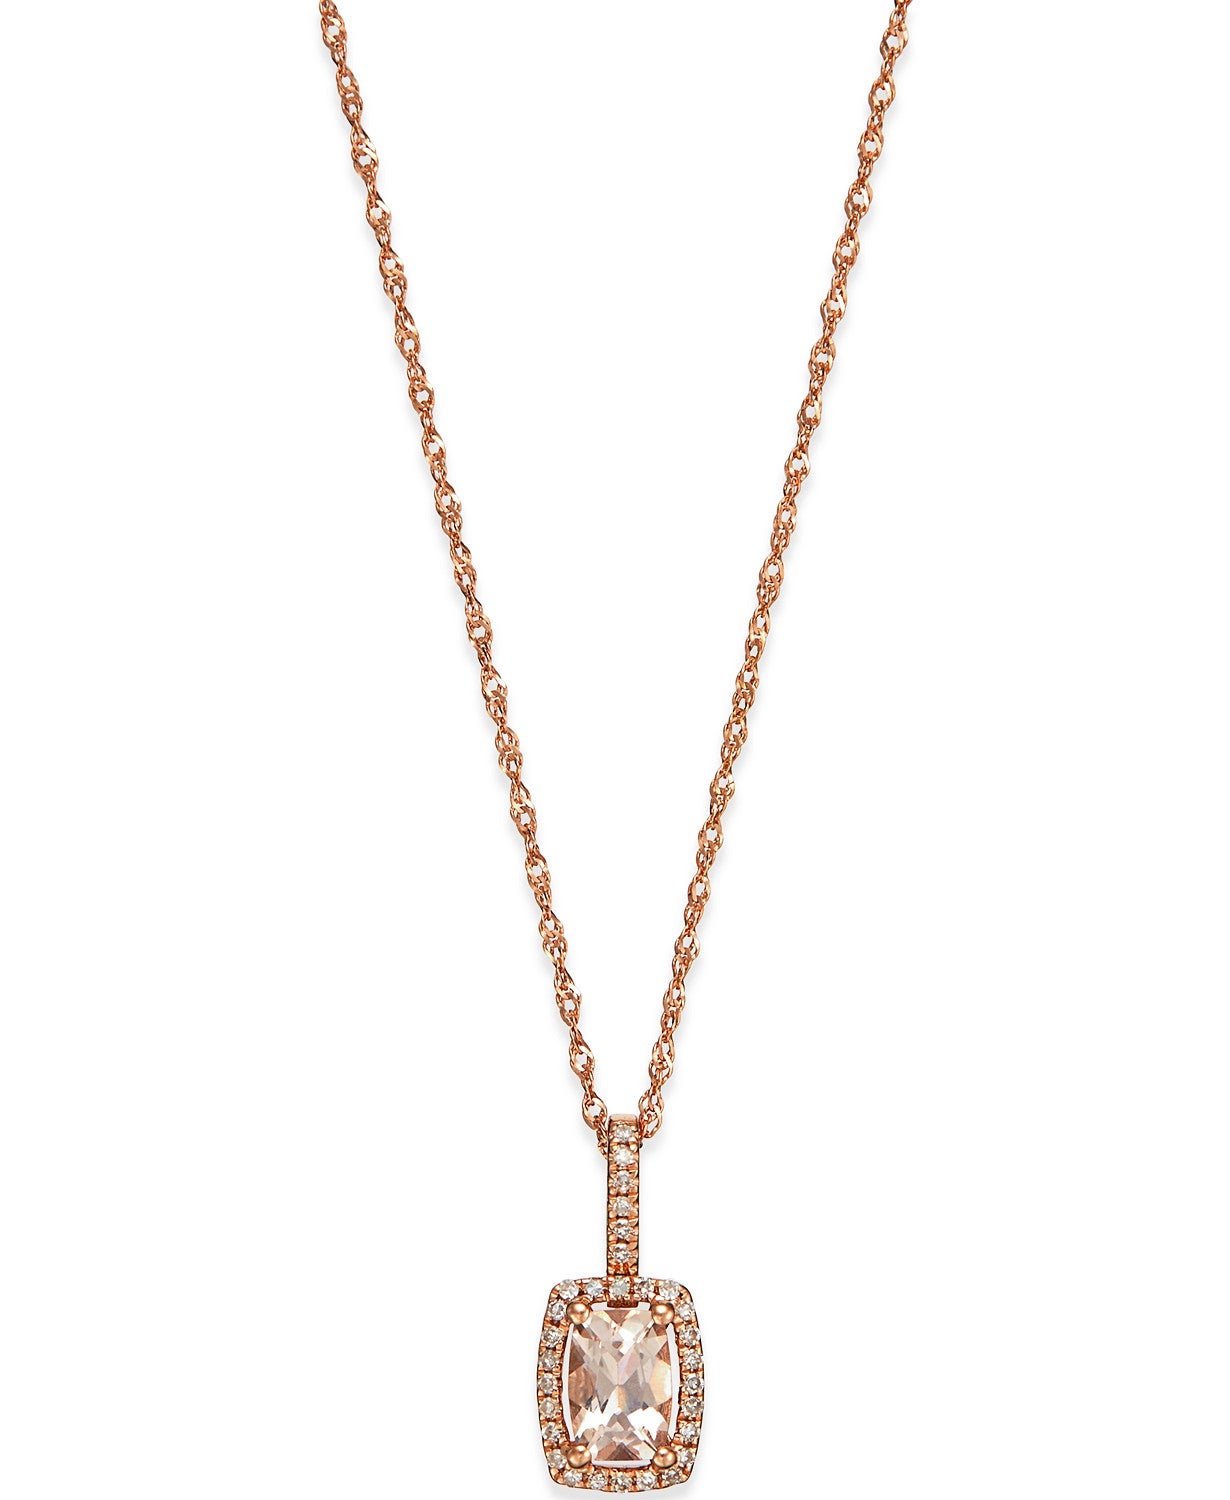 Macy's Jewelry Gold - Macy S Jewelry Gold Tone Shell W Pearls Necklace ...